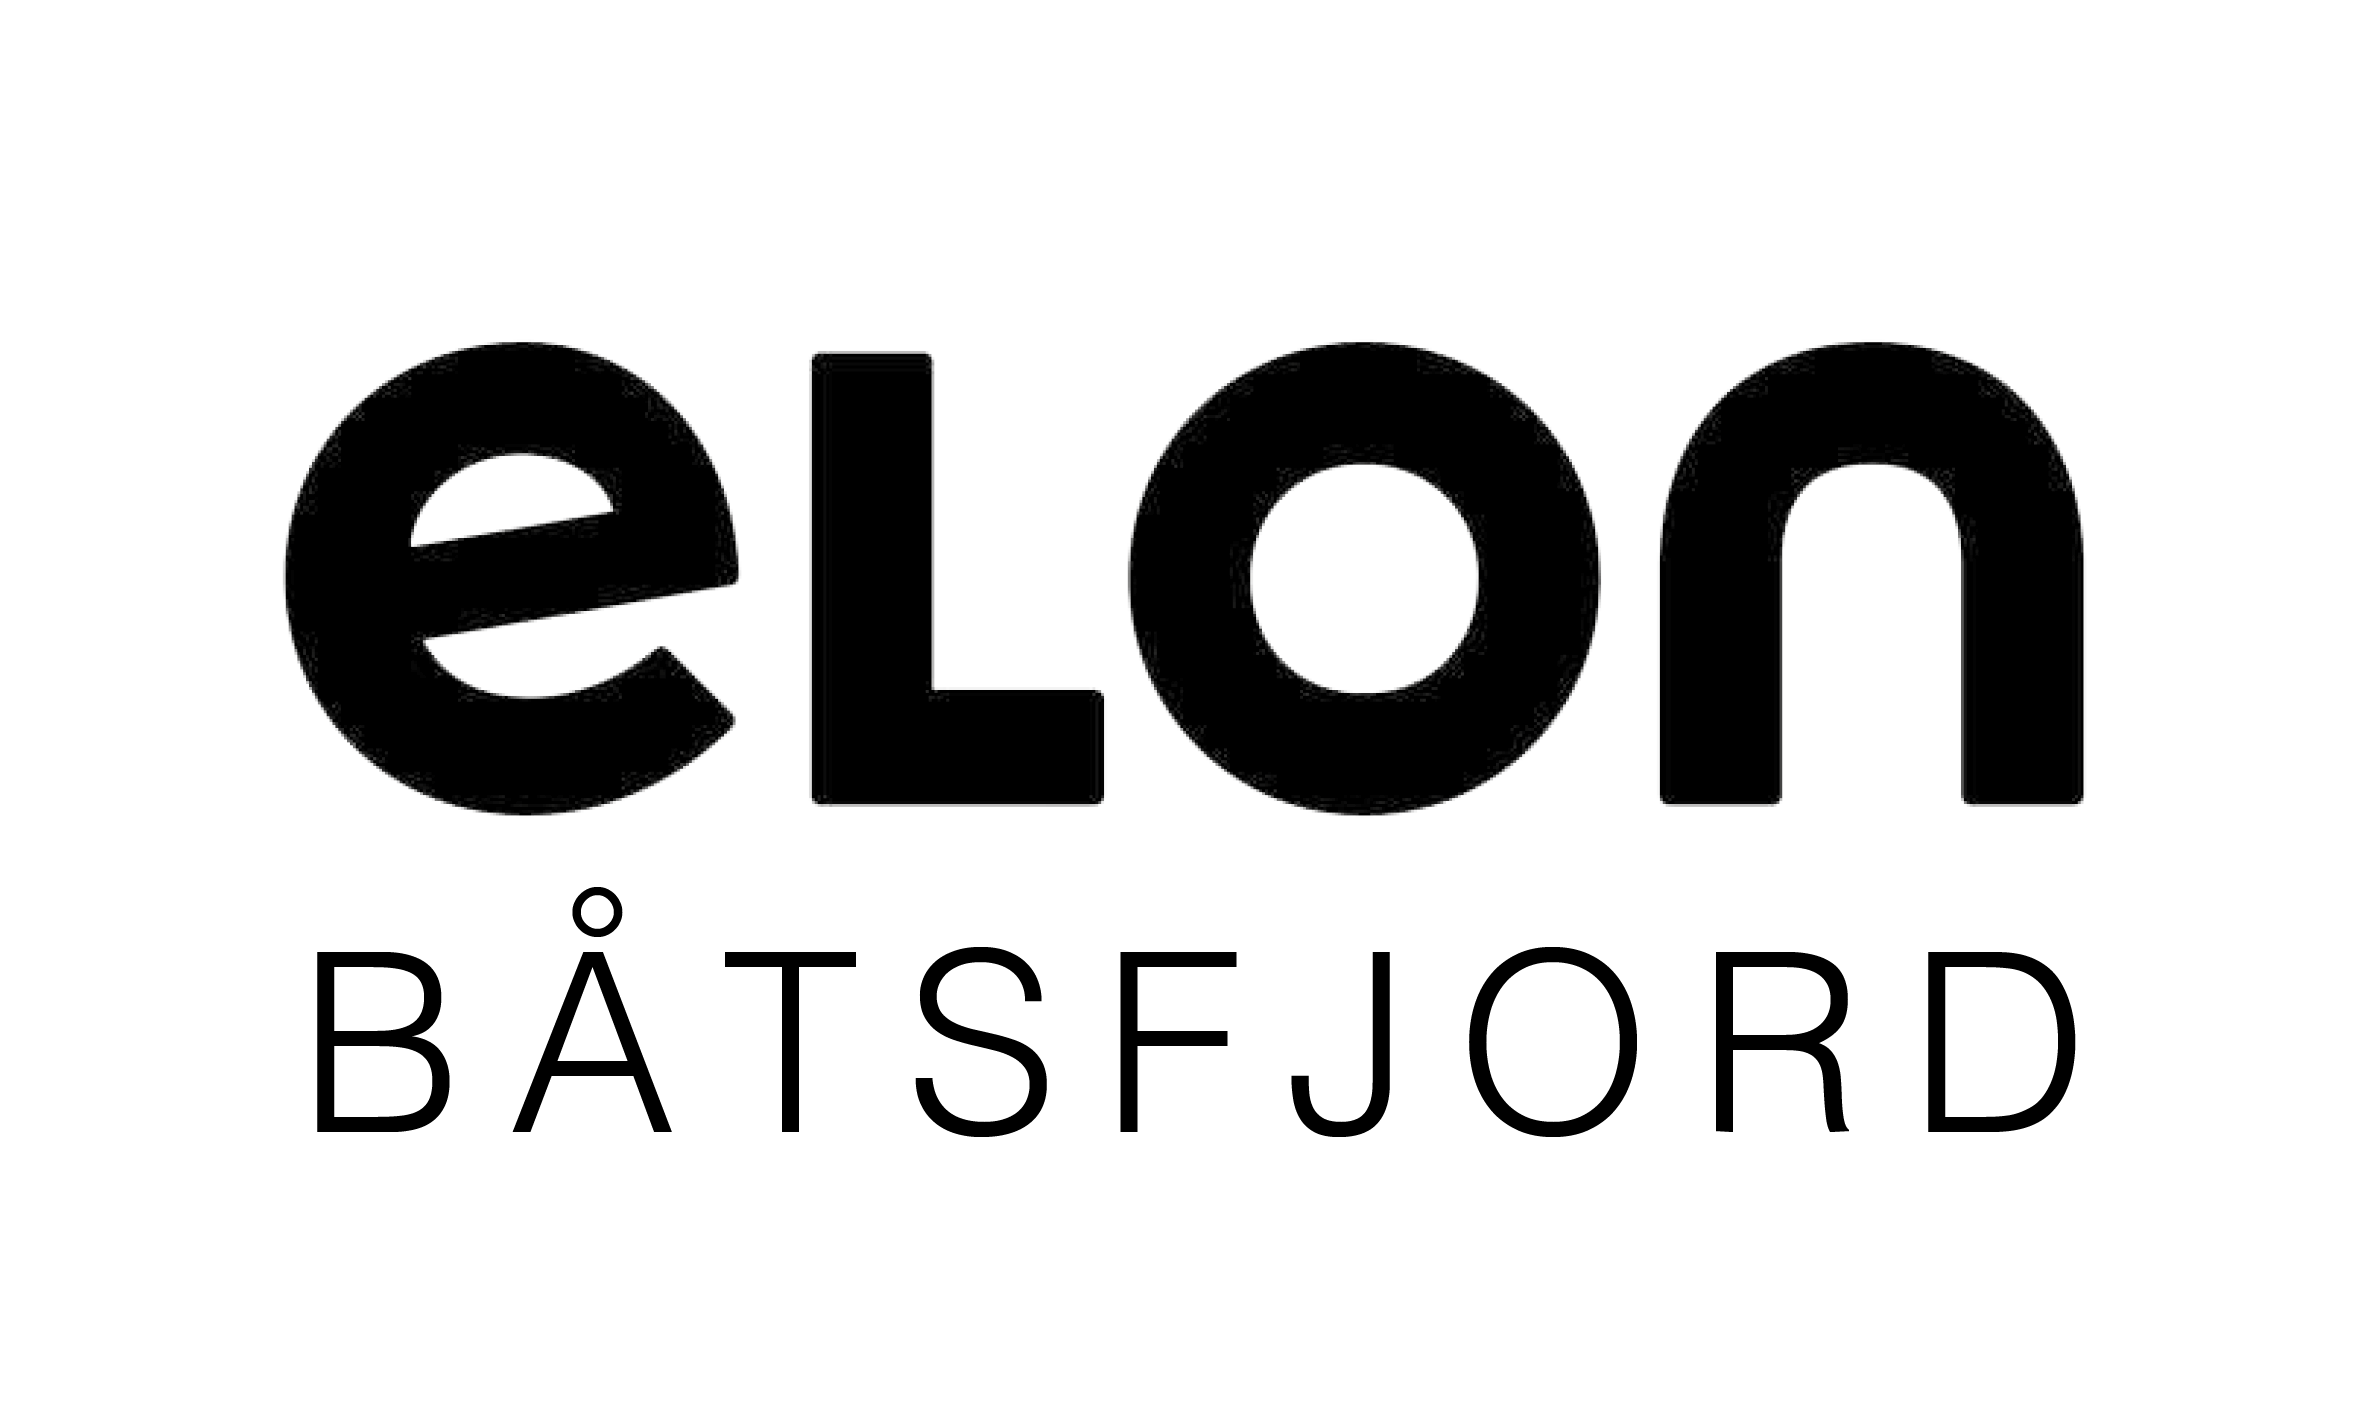 Elon-båtsfjord-logo-nordsjo-svart